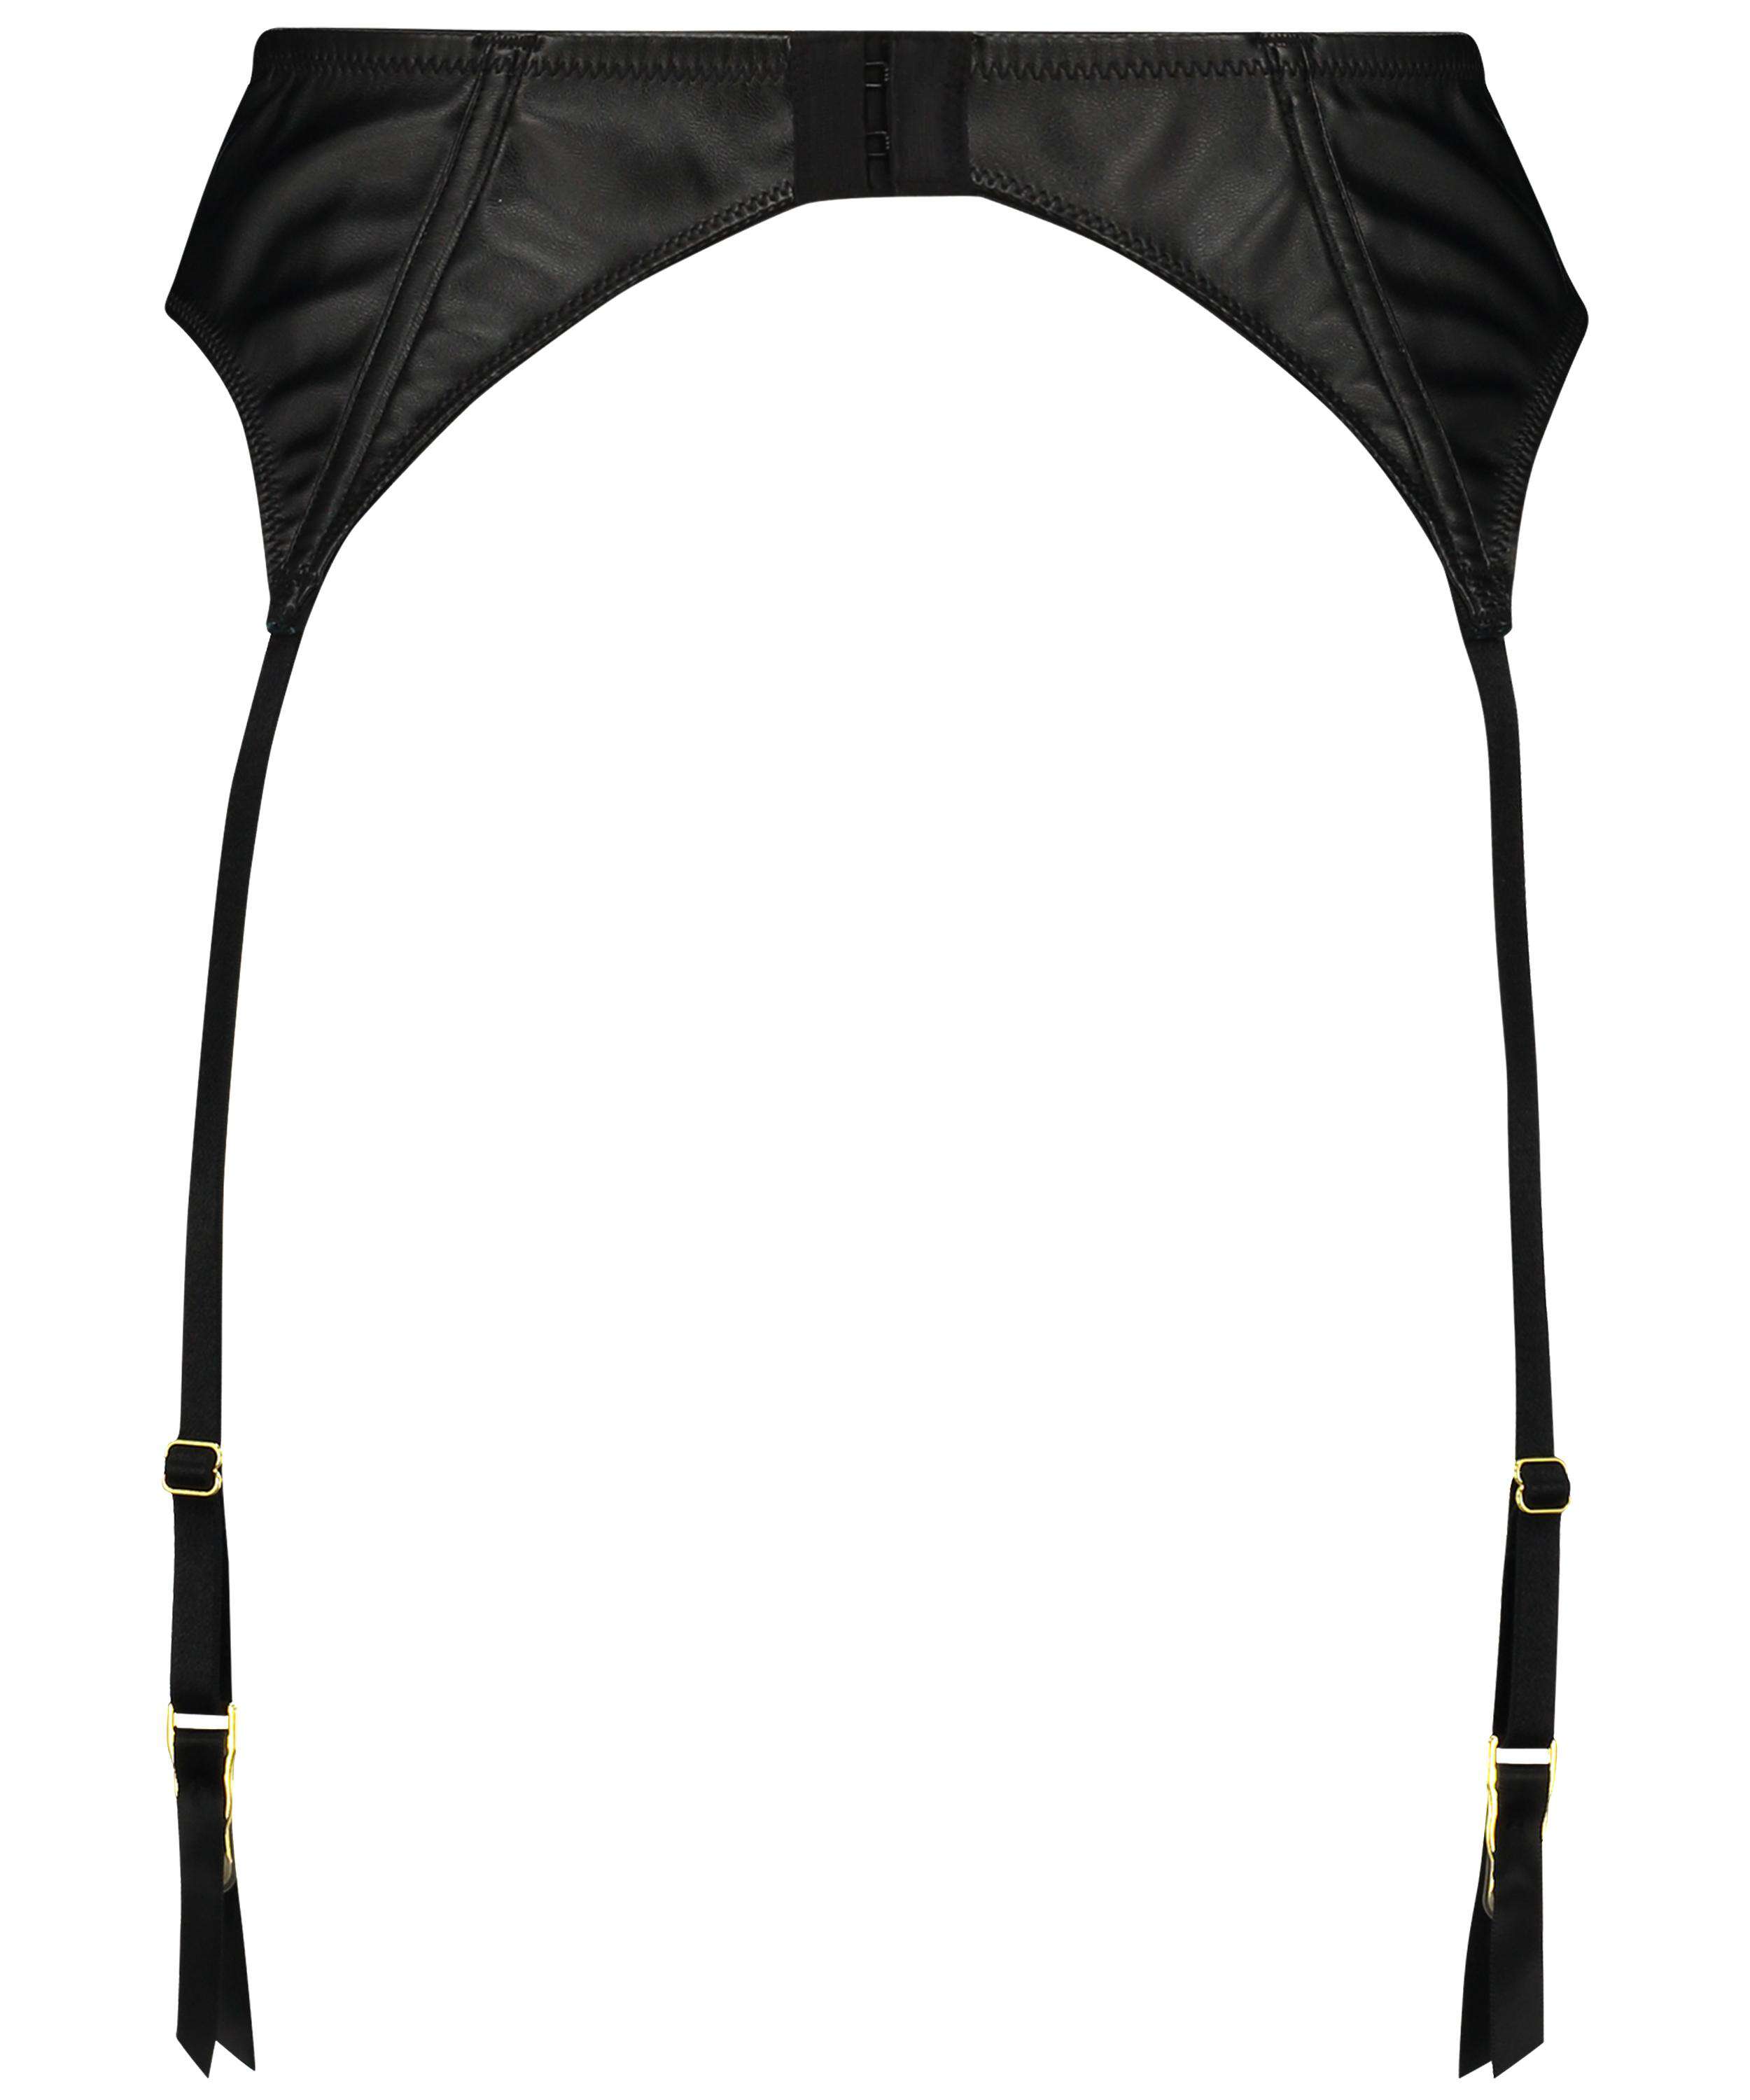 Talia Suspenders, Black, main